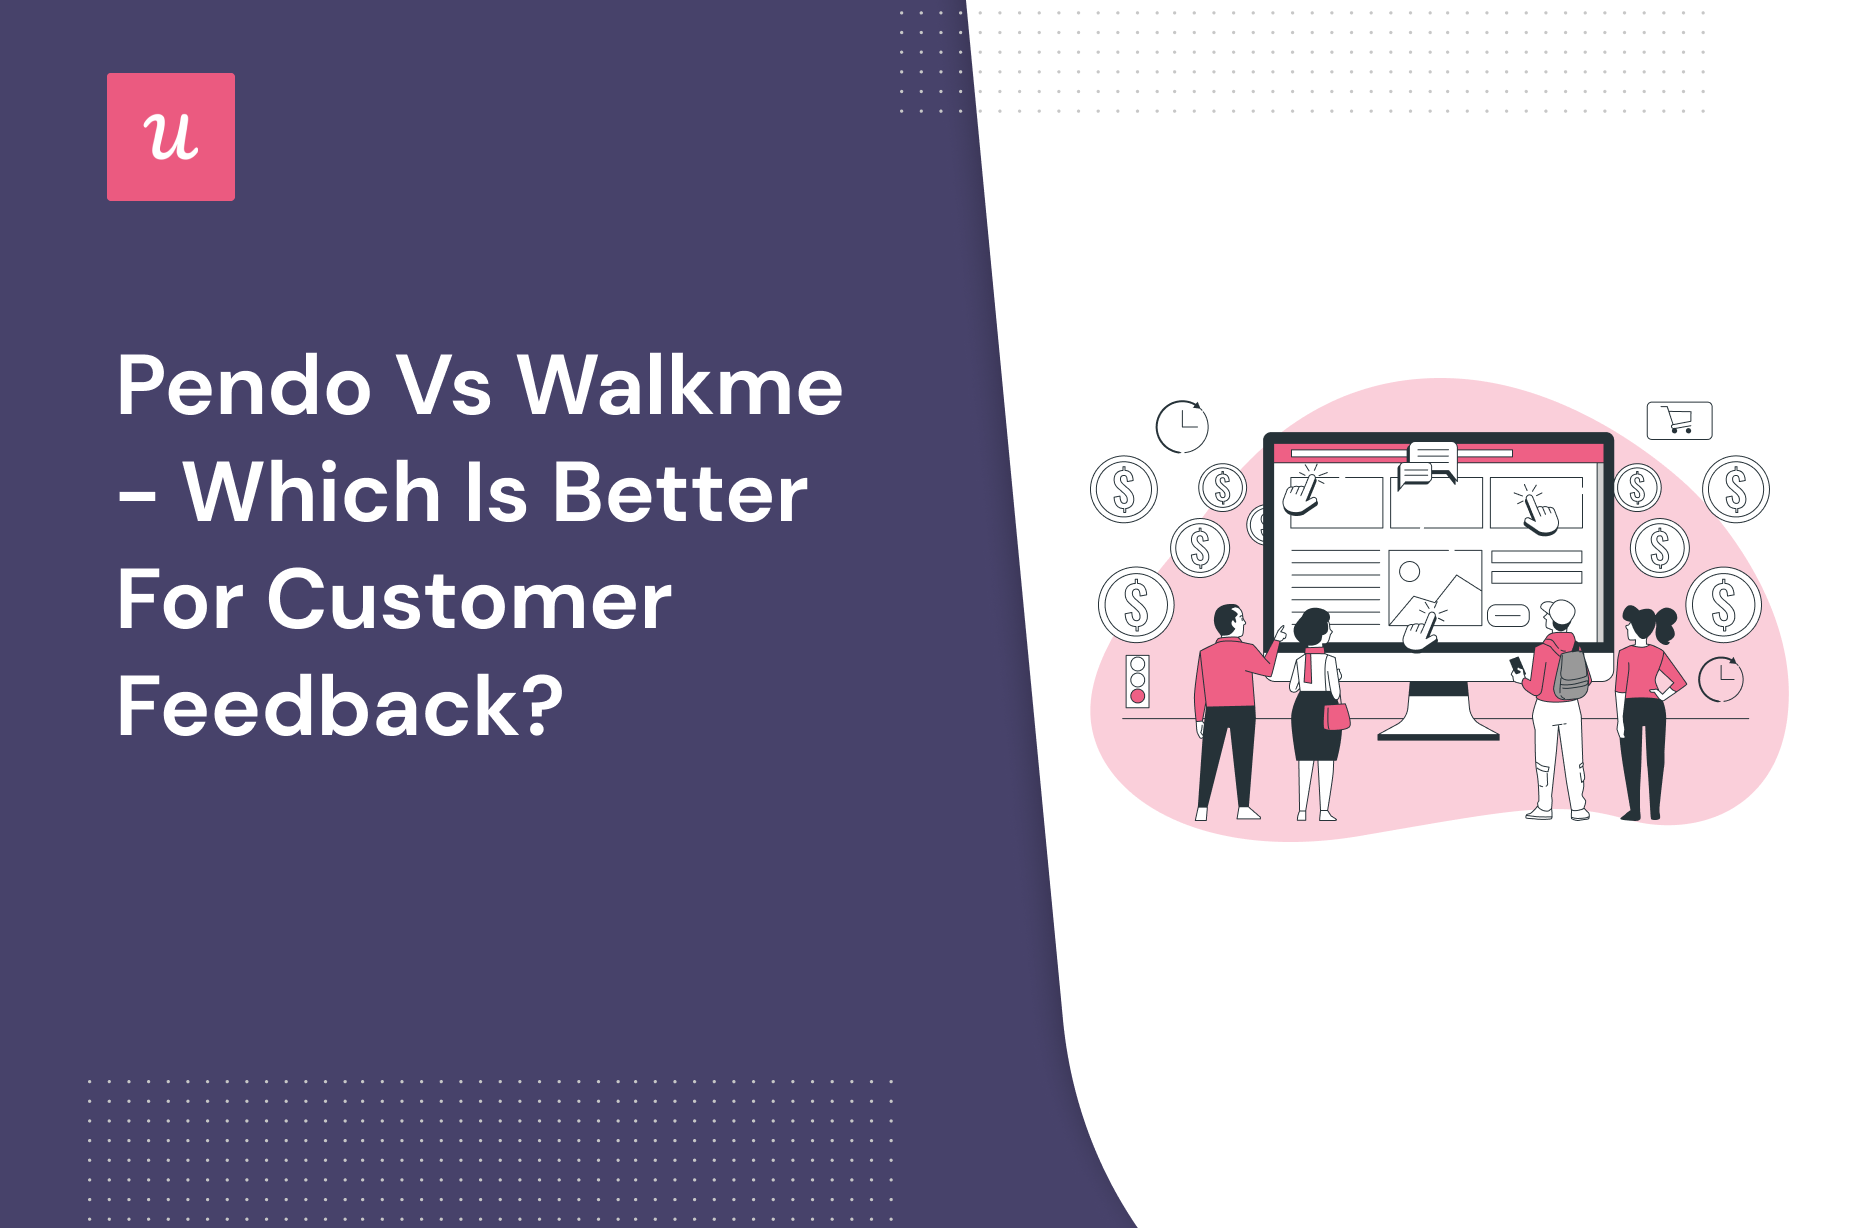 Pendo vs Walkme - which is better for Customer Feedback